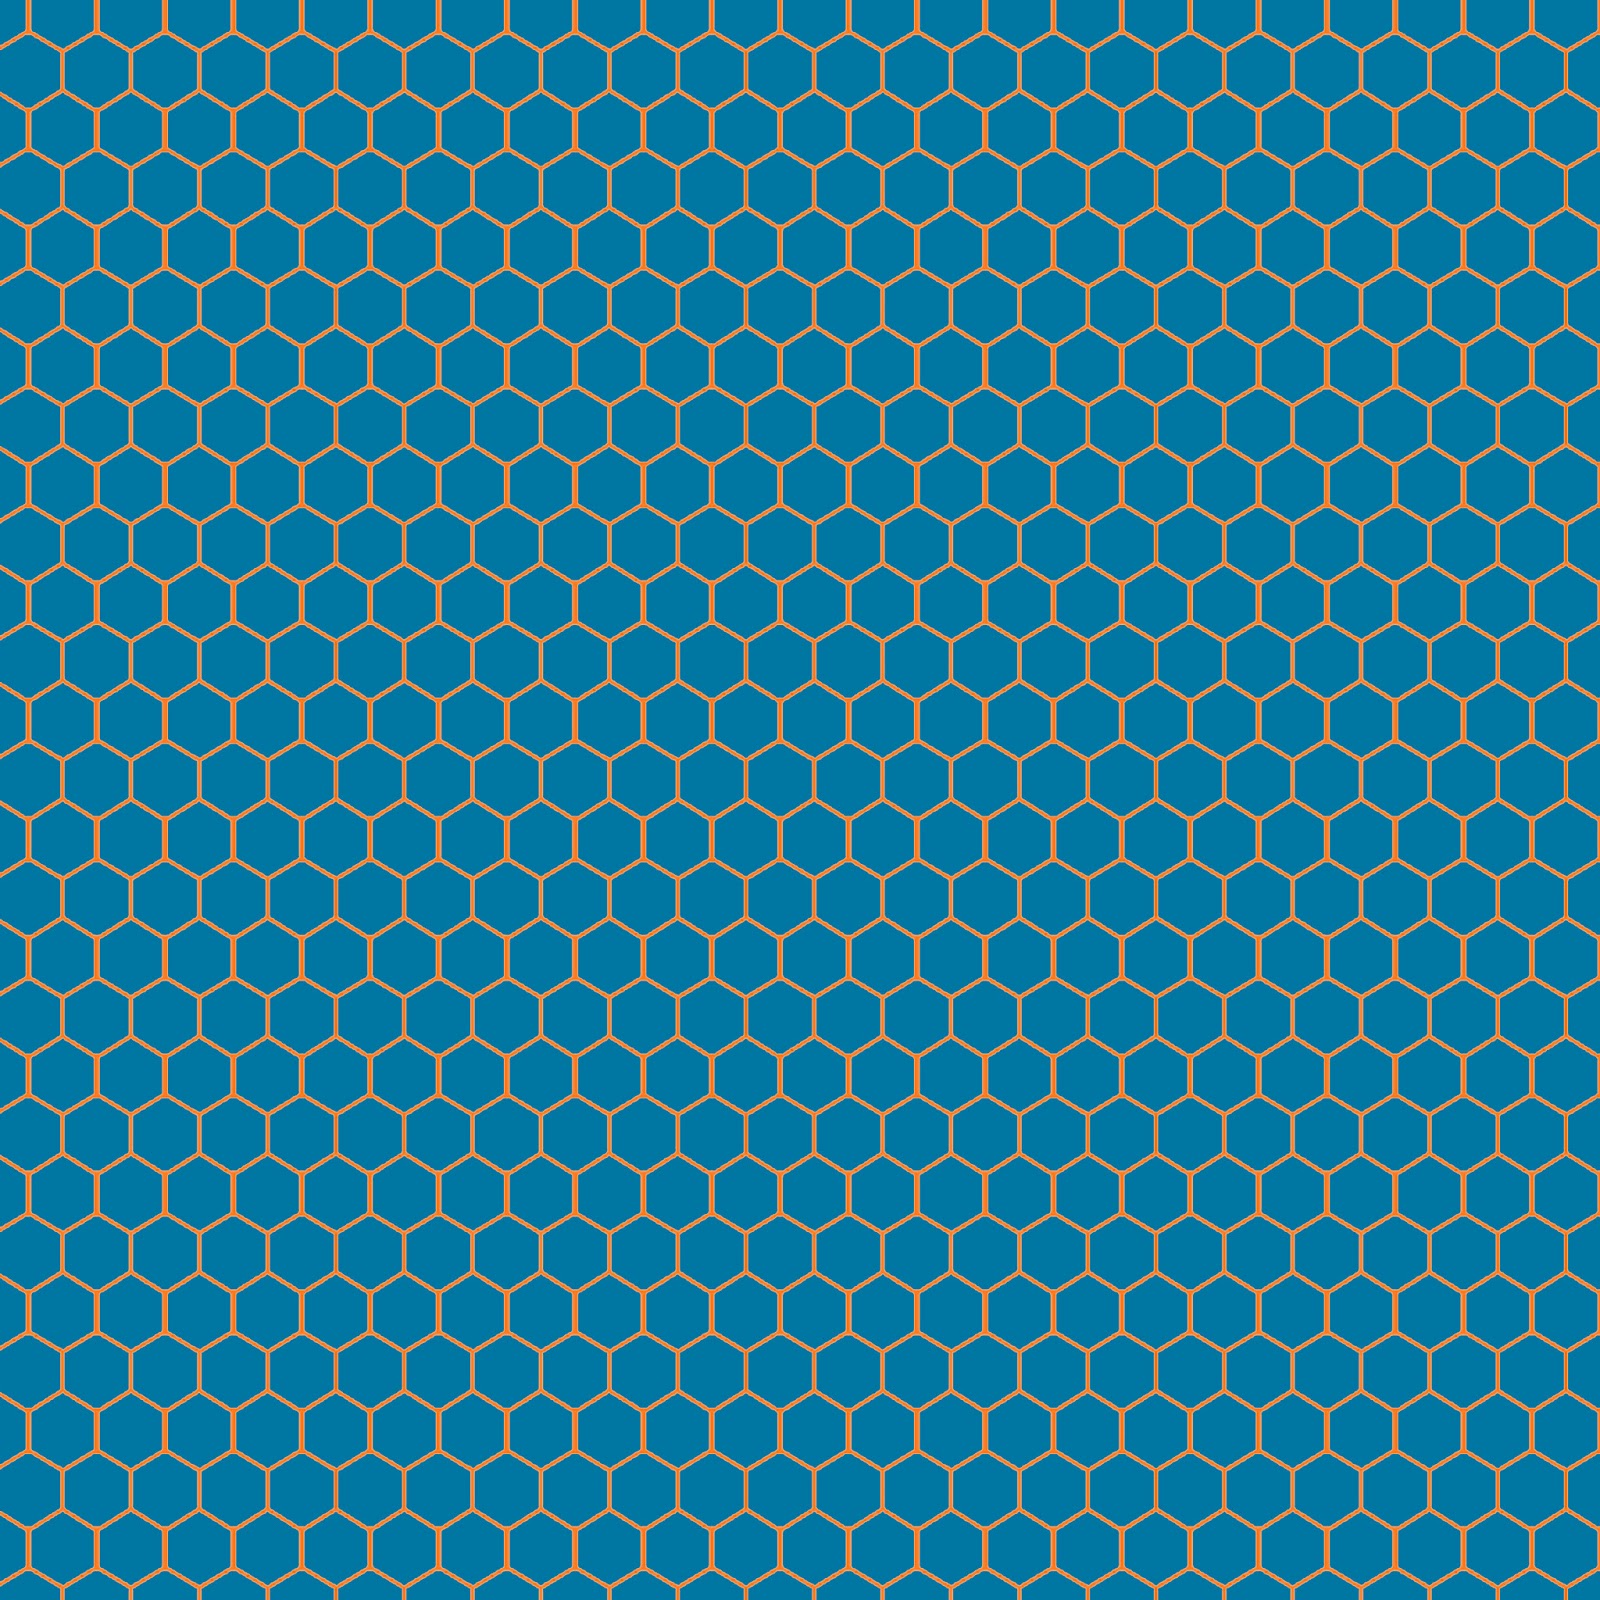 Coral And Navy Chevron Desktop Background Freebie background pattern